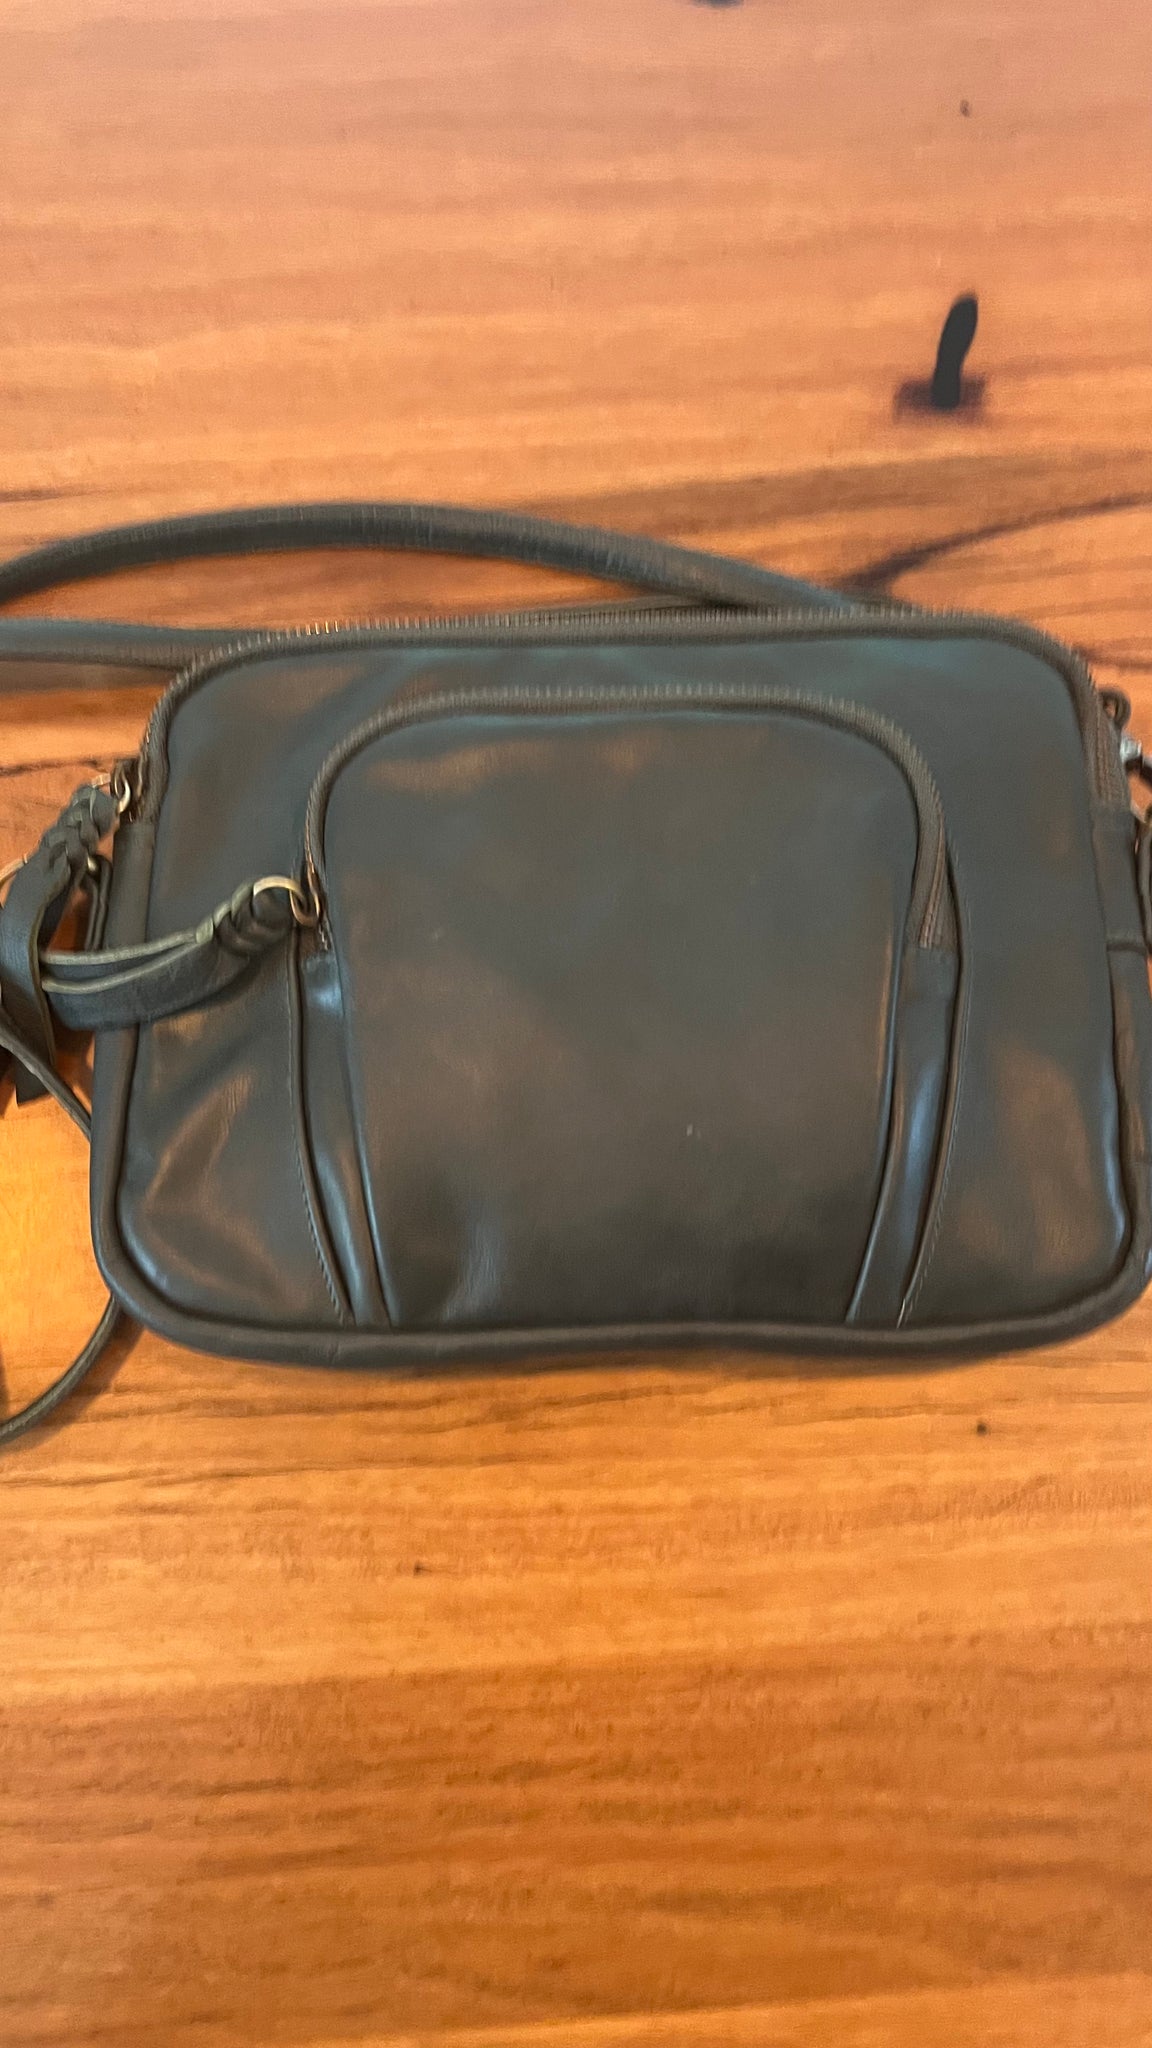 Santori Leather Bag - Dark Green